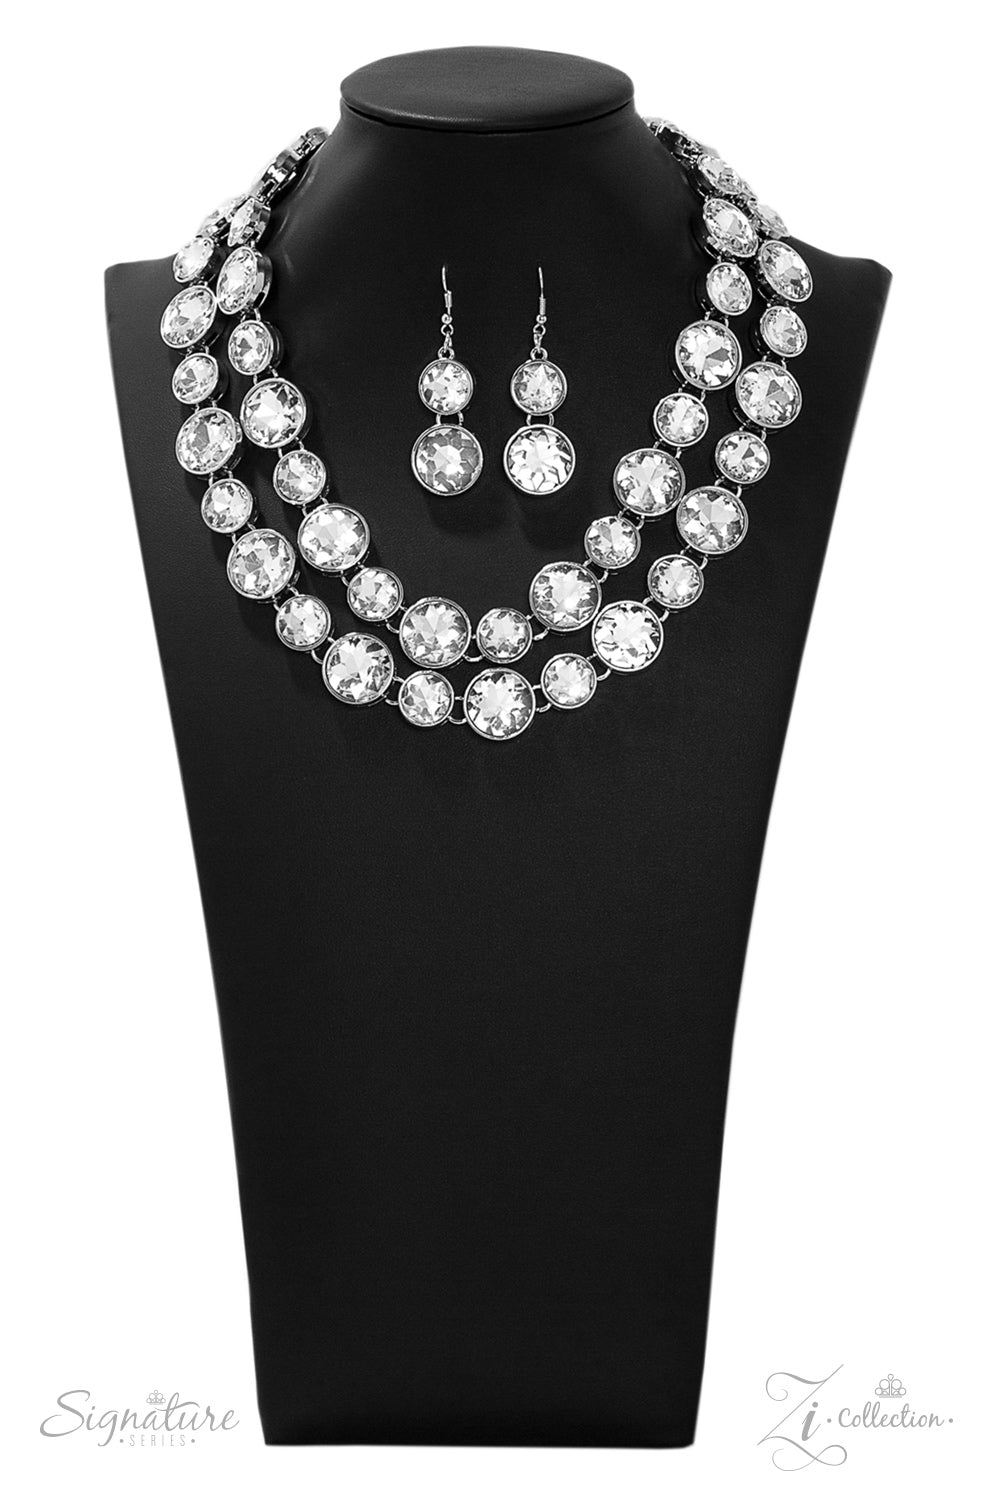 The Natasha Zi Collection Silver Paparazzi Necklace Cashmere Pink Jewels - Cashmere Pink Jewels & Accessories, Cashmere Pink Jewels & Accessories - Paparazzi